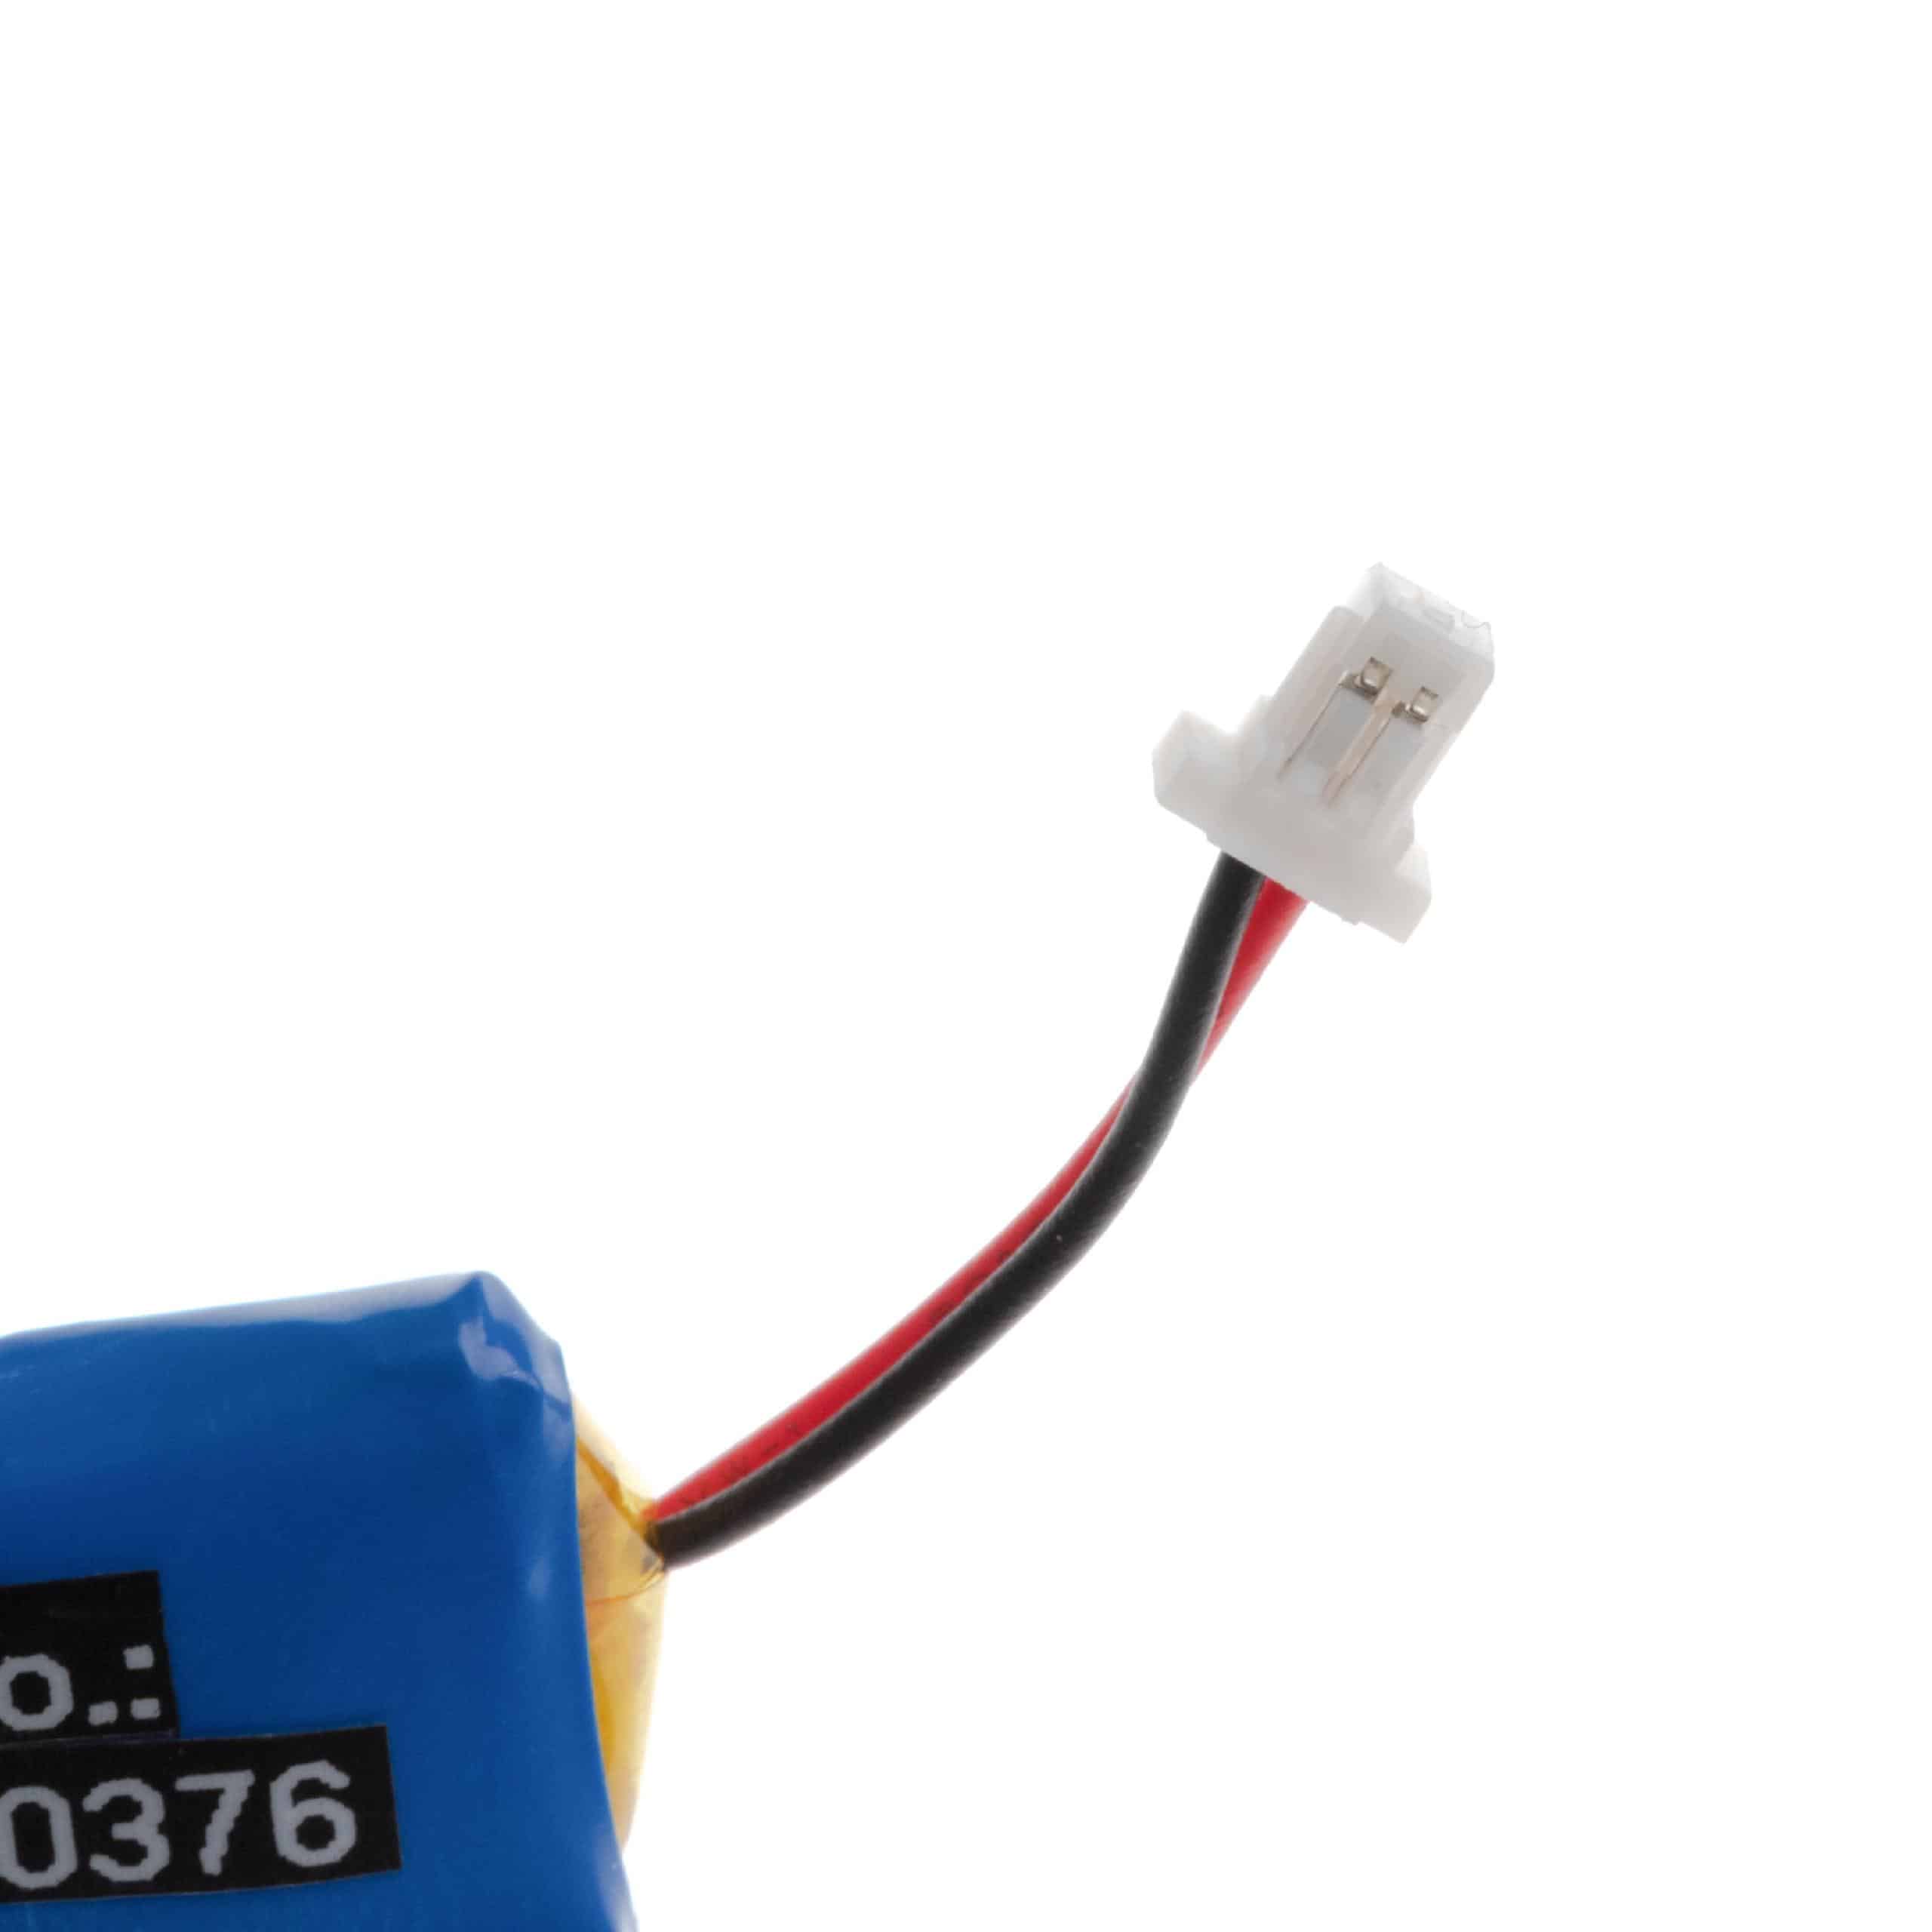 Wireless Headset Battery Replacement for Plantronics 84479-01, 86180-01 - 110mAh 3.7V Li-polymer